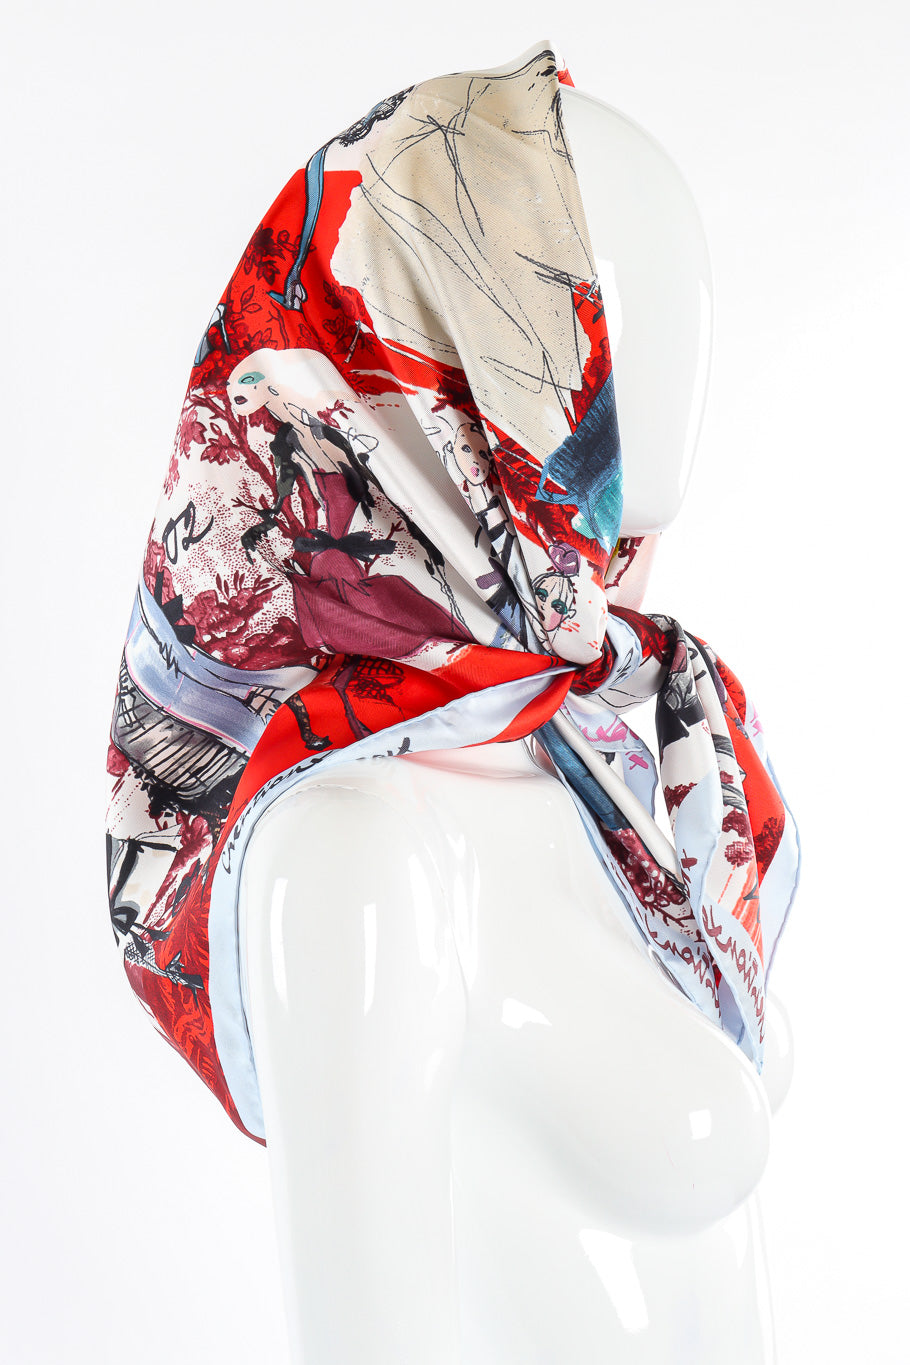 Christian Lacroix Couture Sketch Silk Scarf on mannequin @recessla